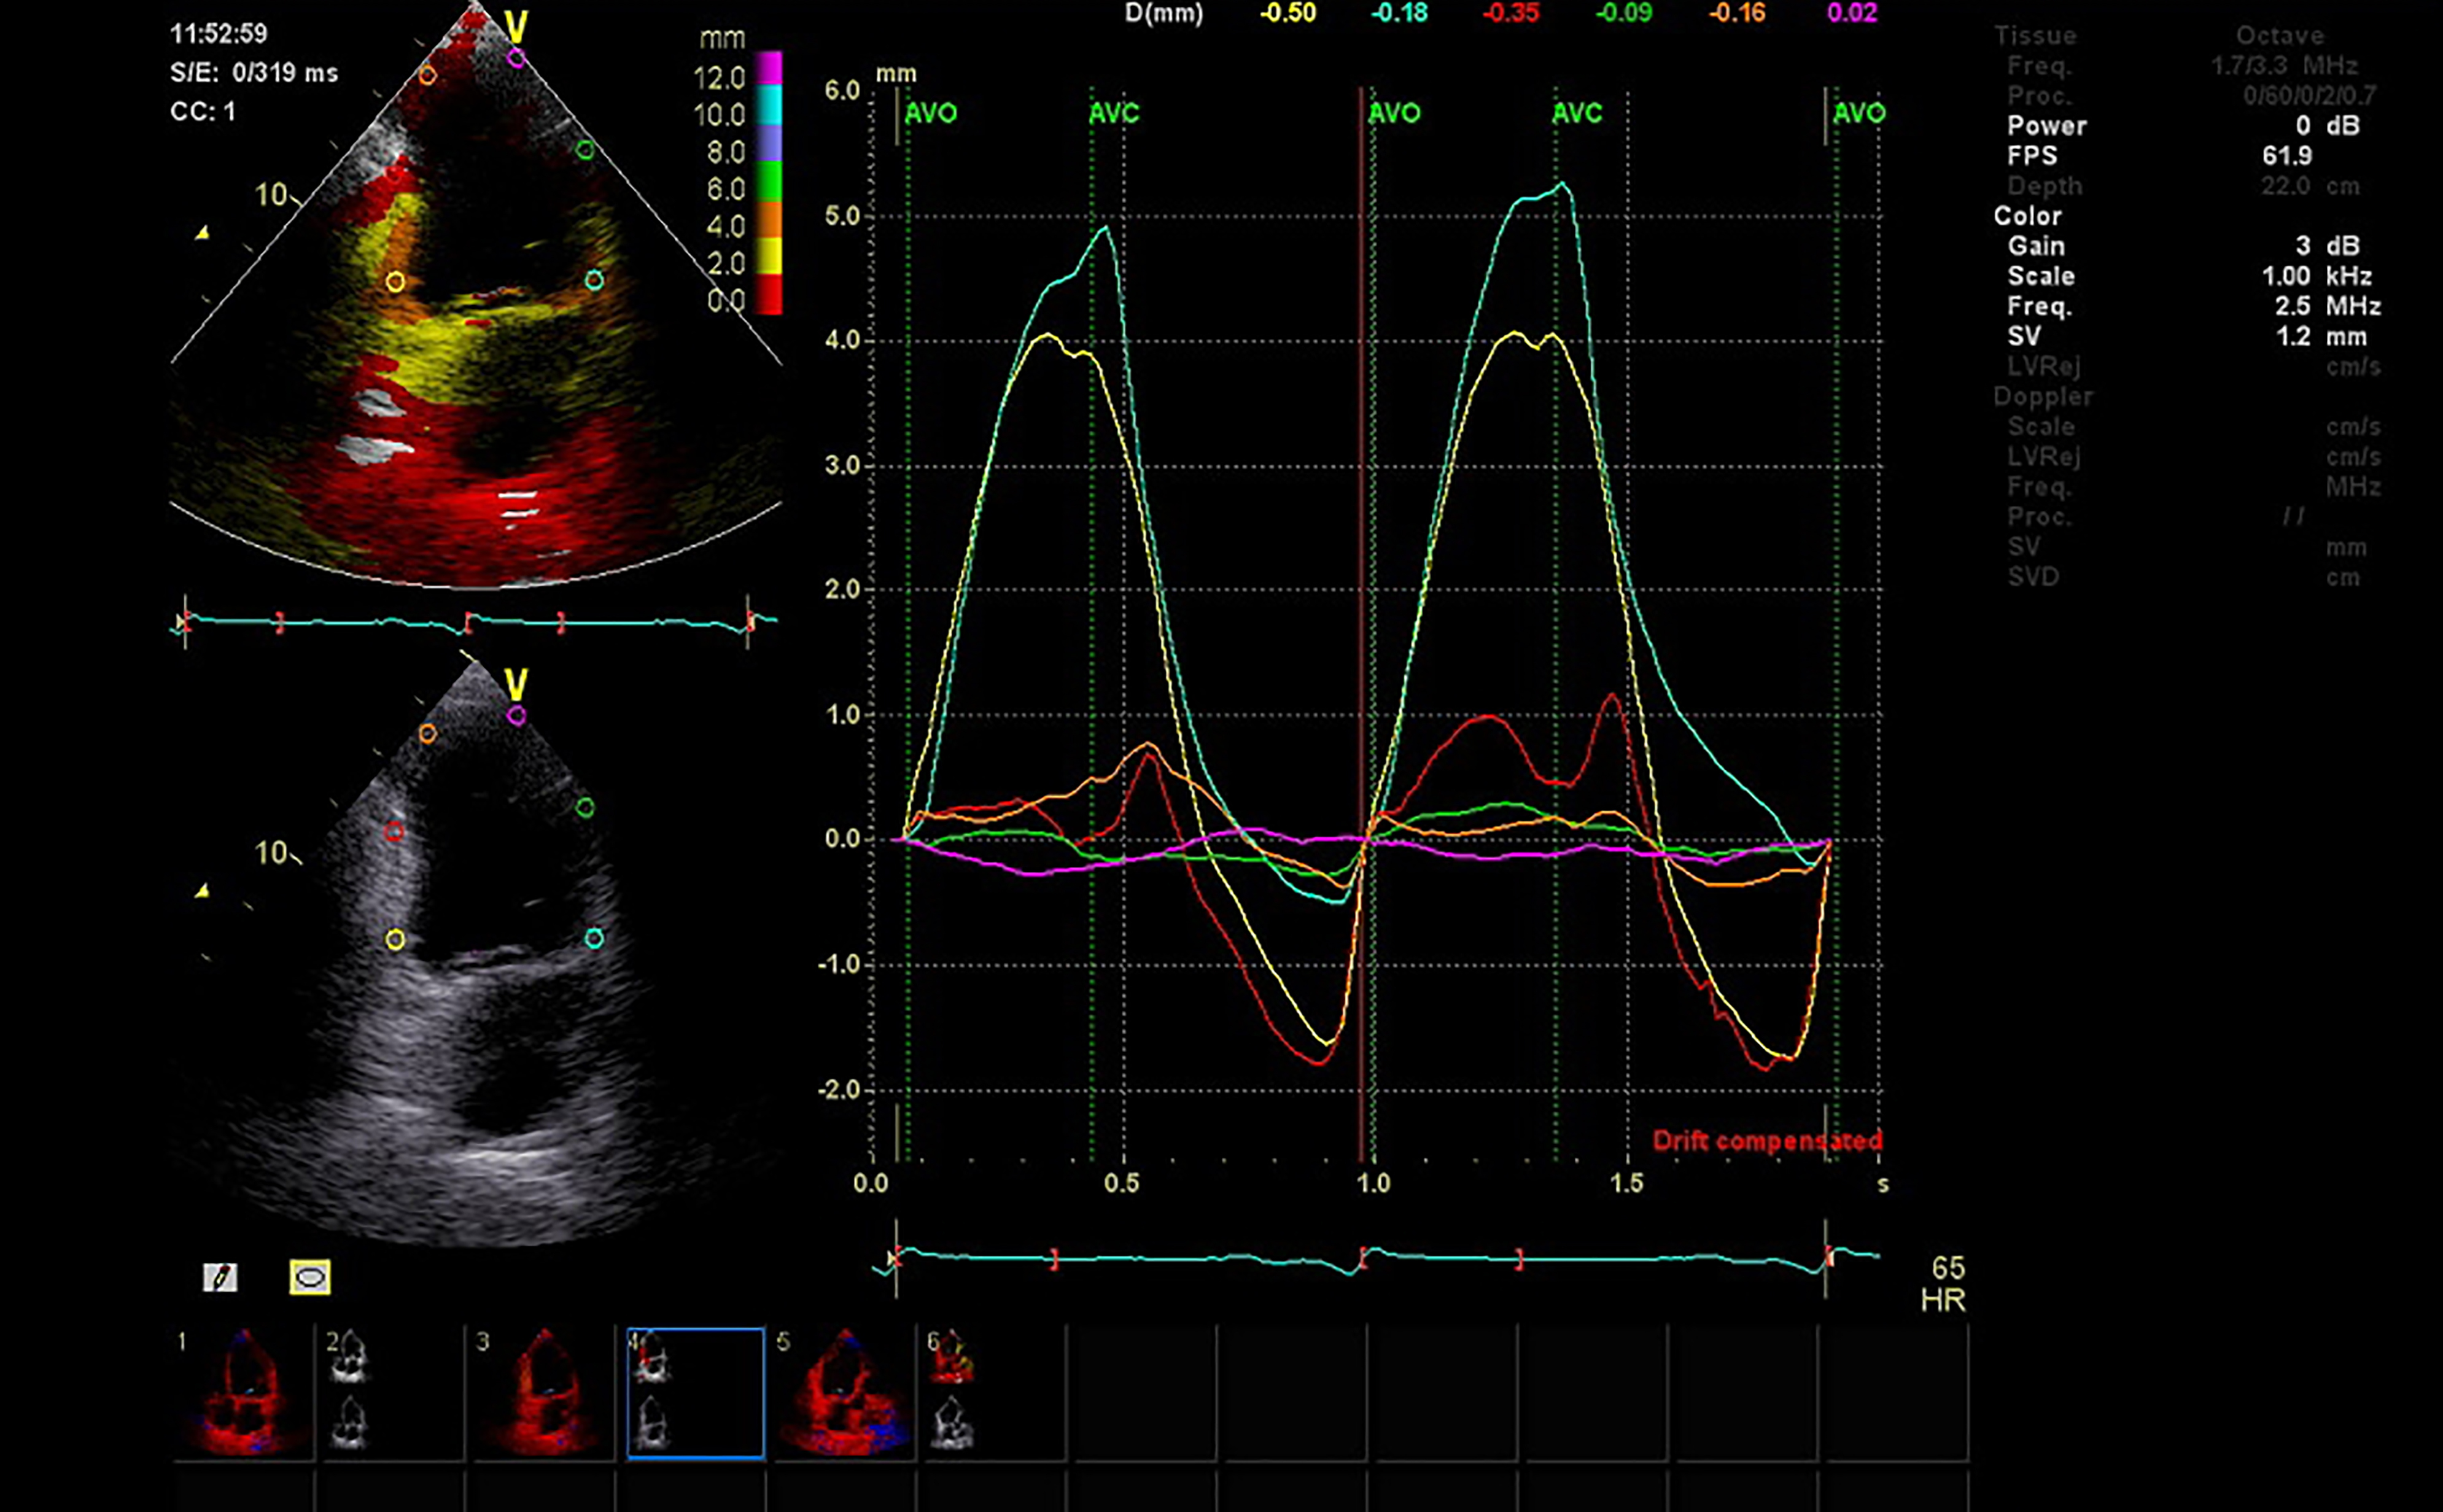 Screen of echocardiography (ultrasound) machine